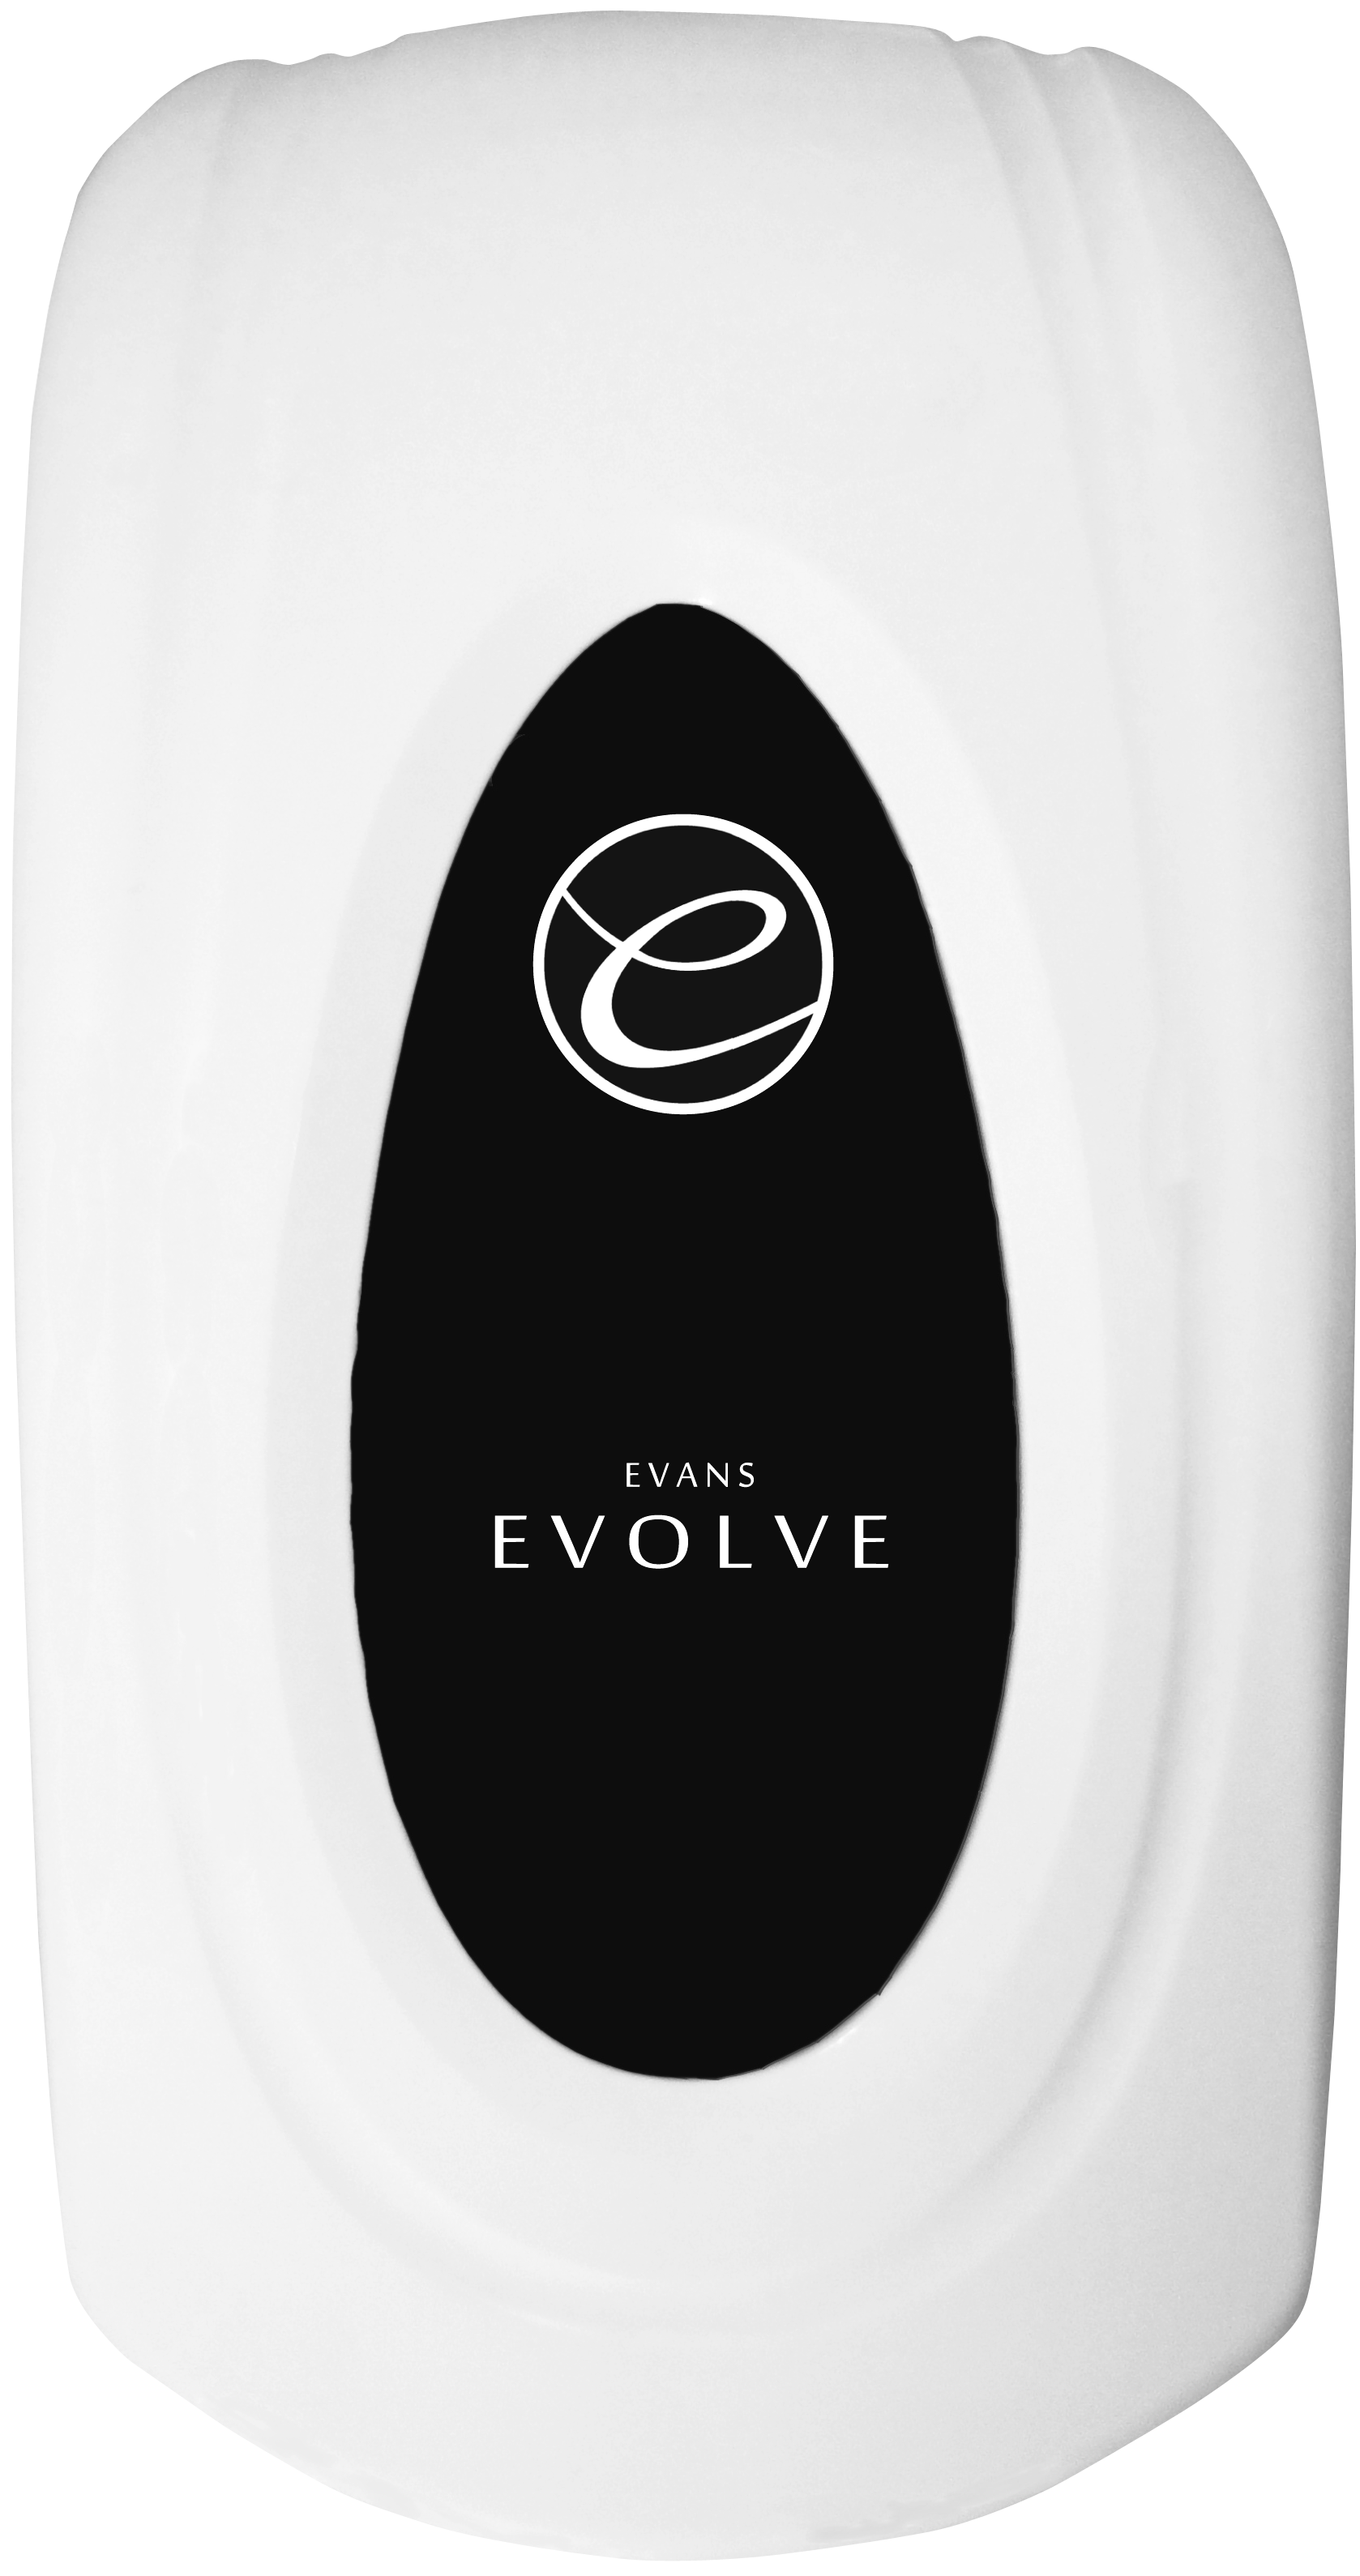 Evans Evolve Liquid Soap Dispenser 